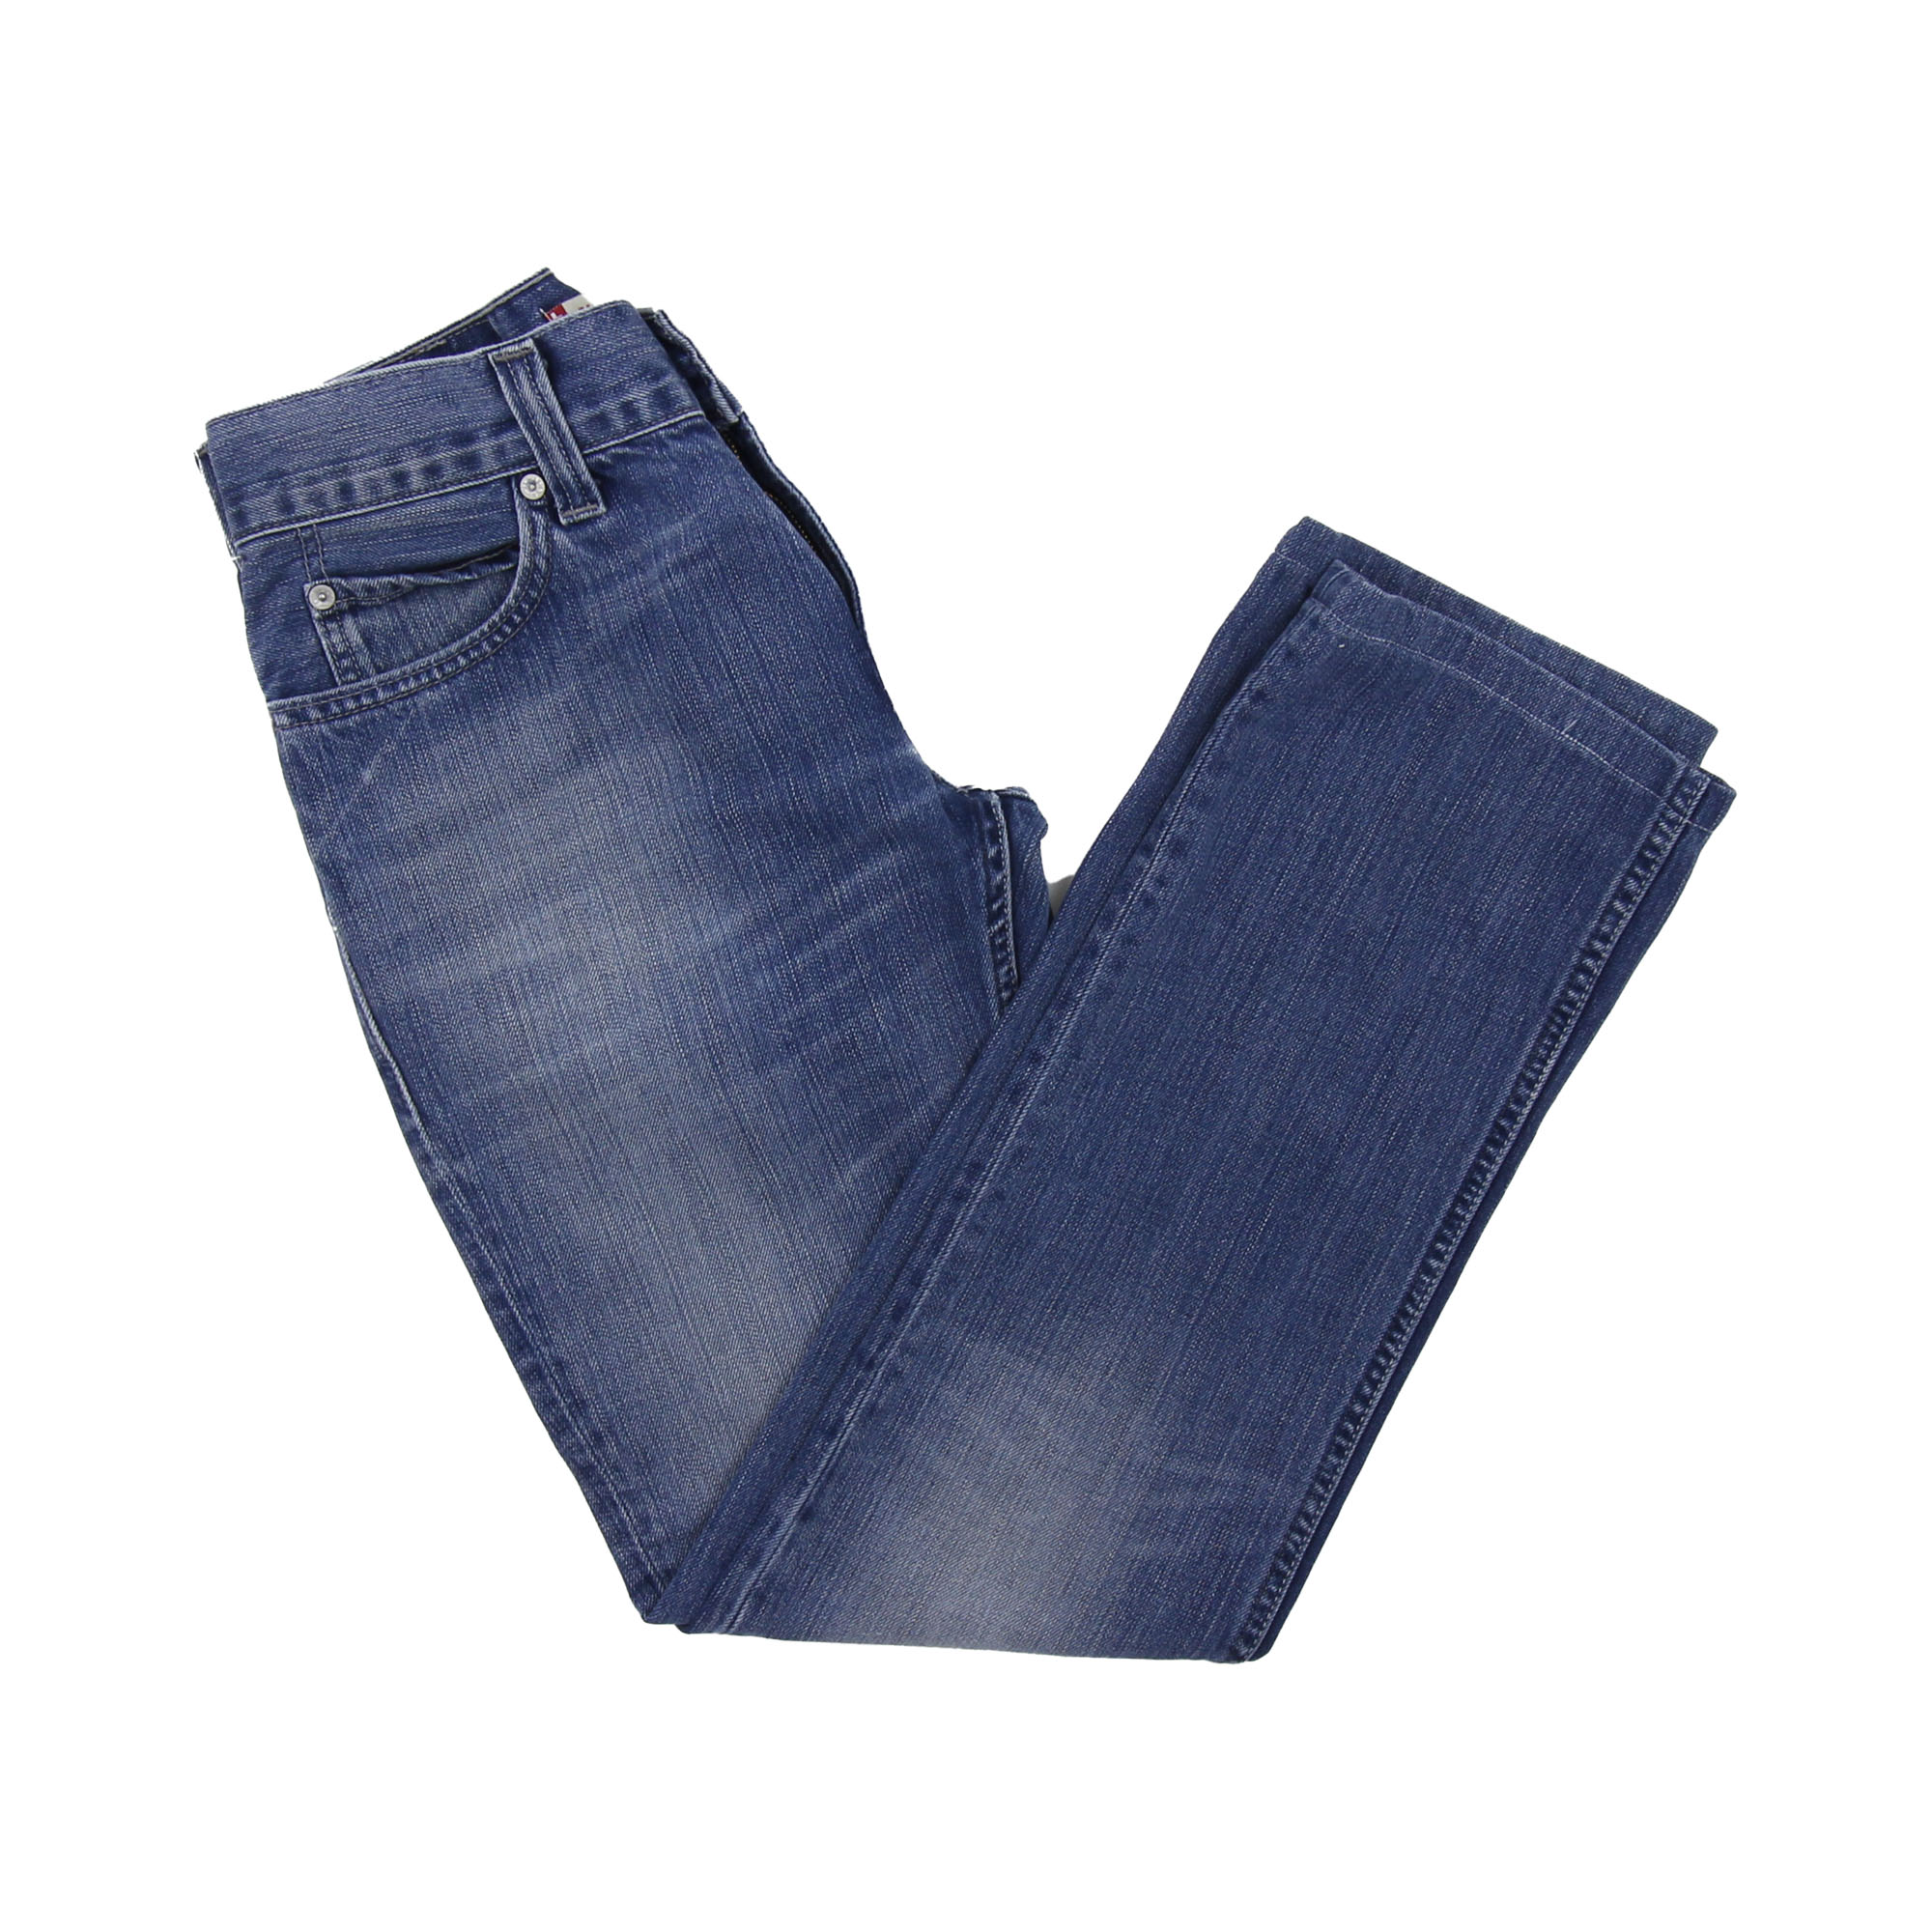 Levi's 511 Jeans -  W31 L34